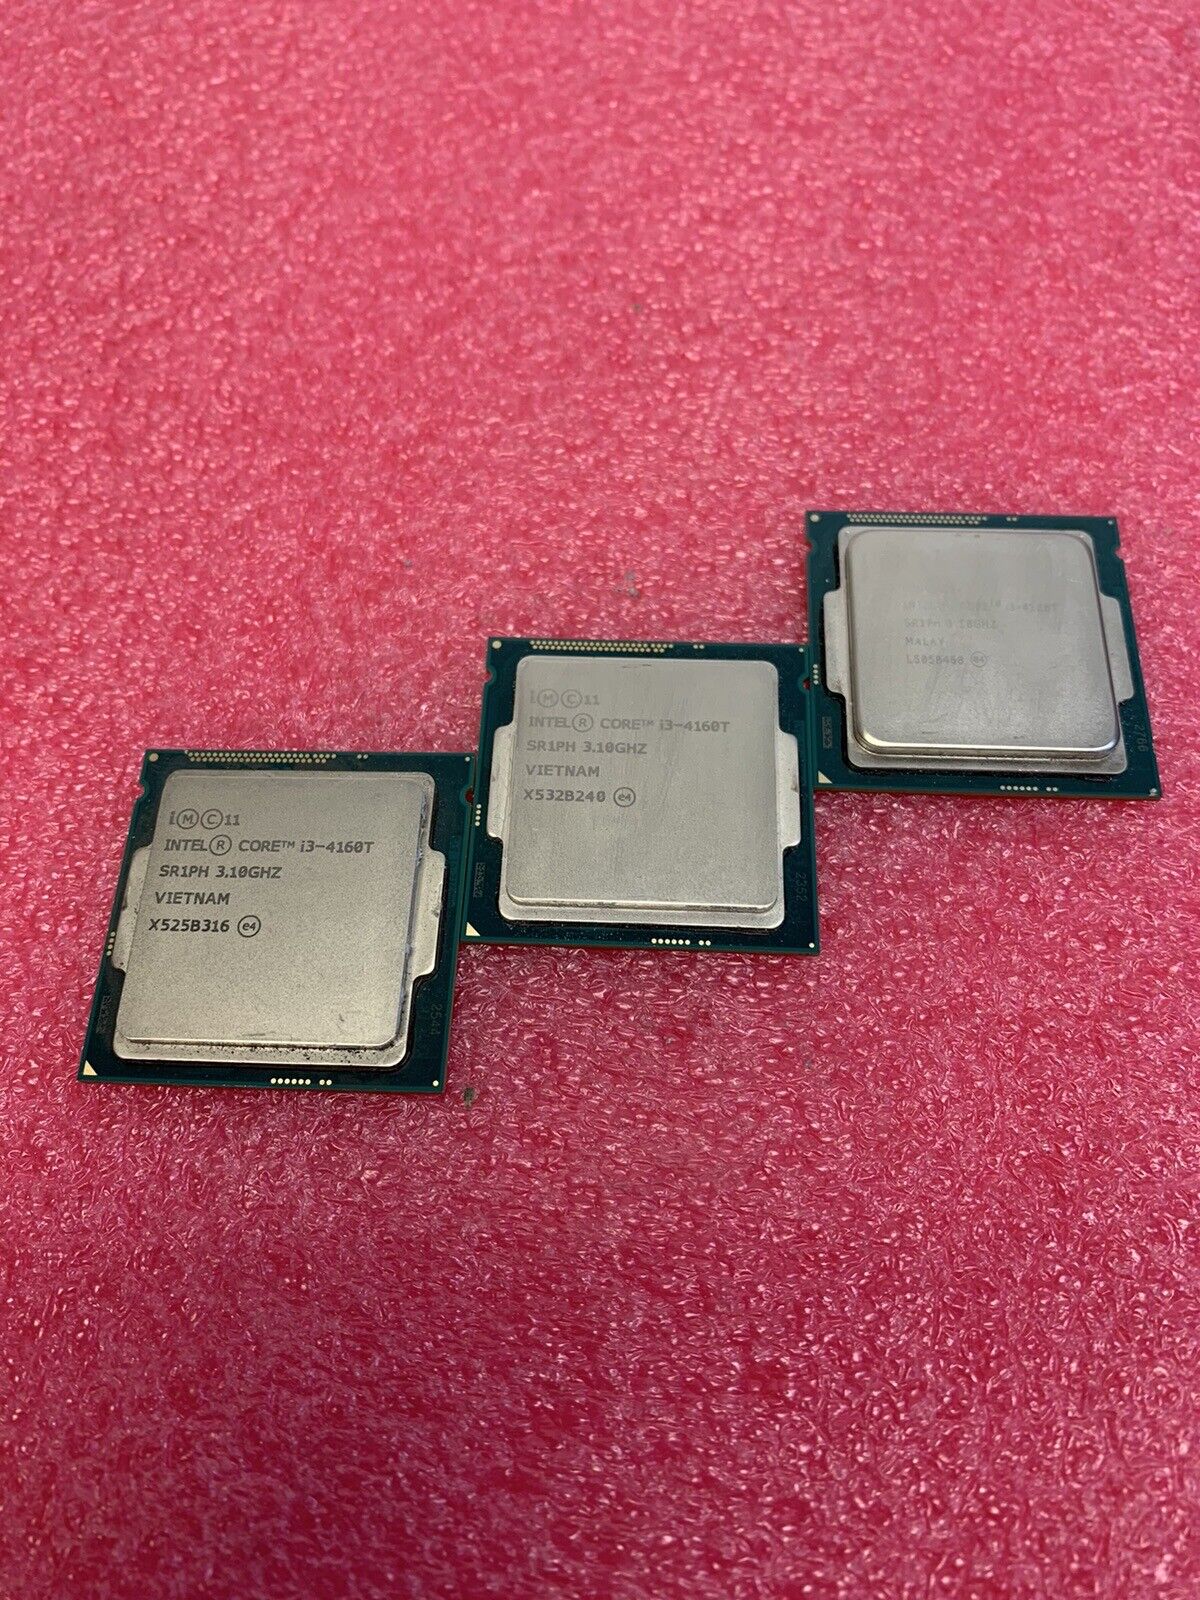 lot of 3 Intel Core i3-4160T SR1PH 3.1GHz